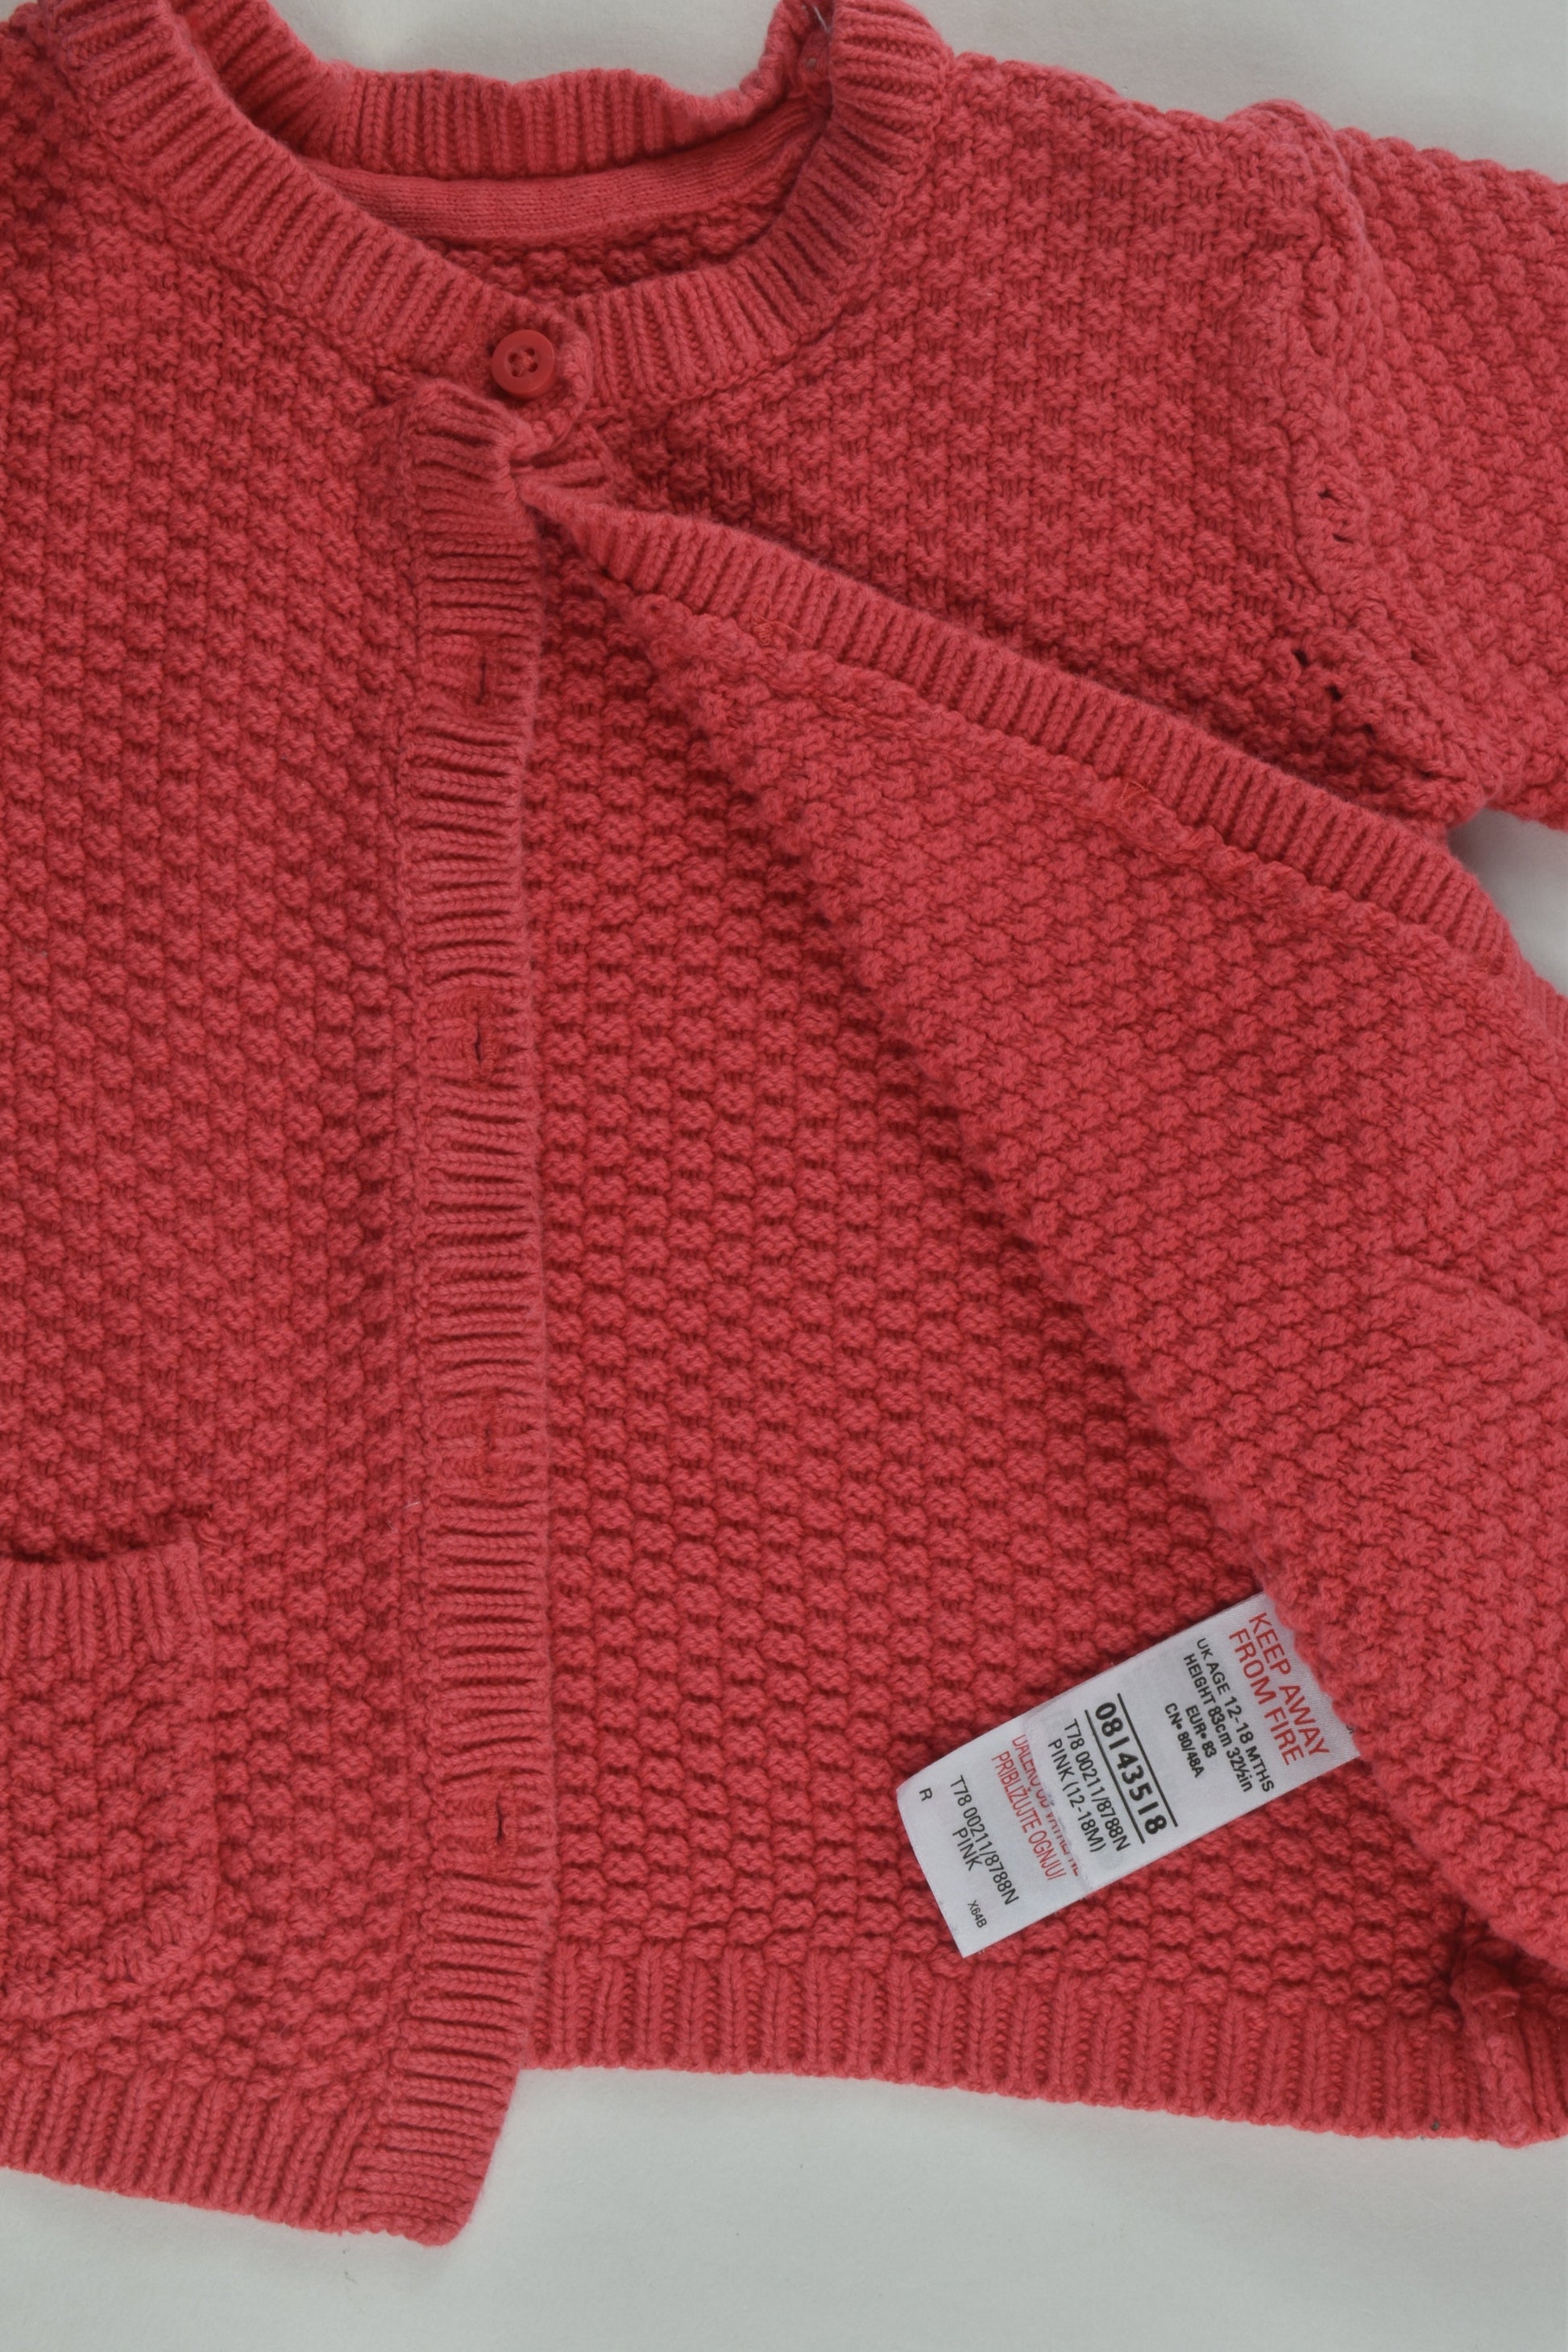 Marks & Spencer Size 1 Knit Cardigan